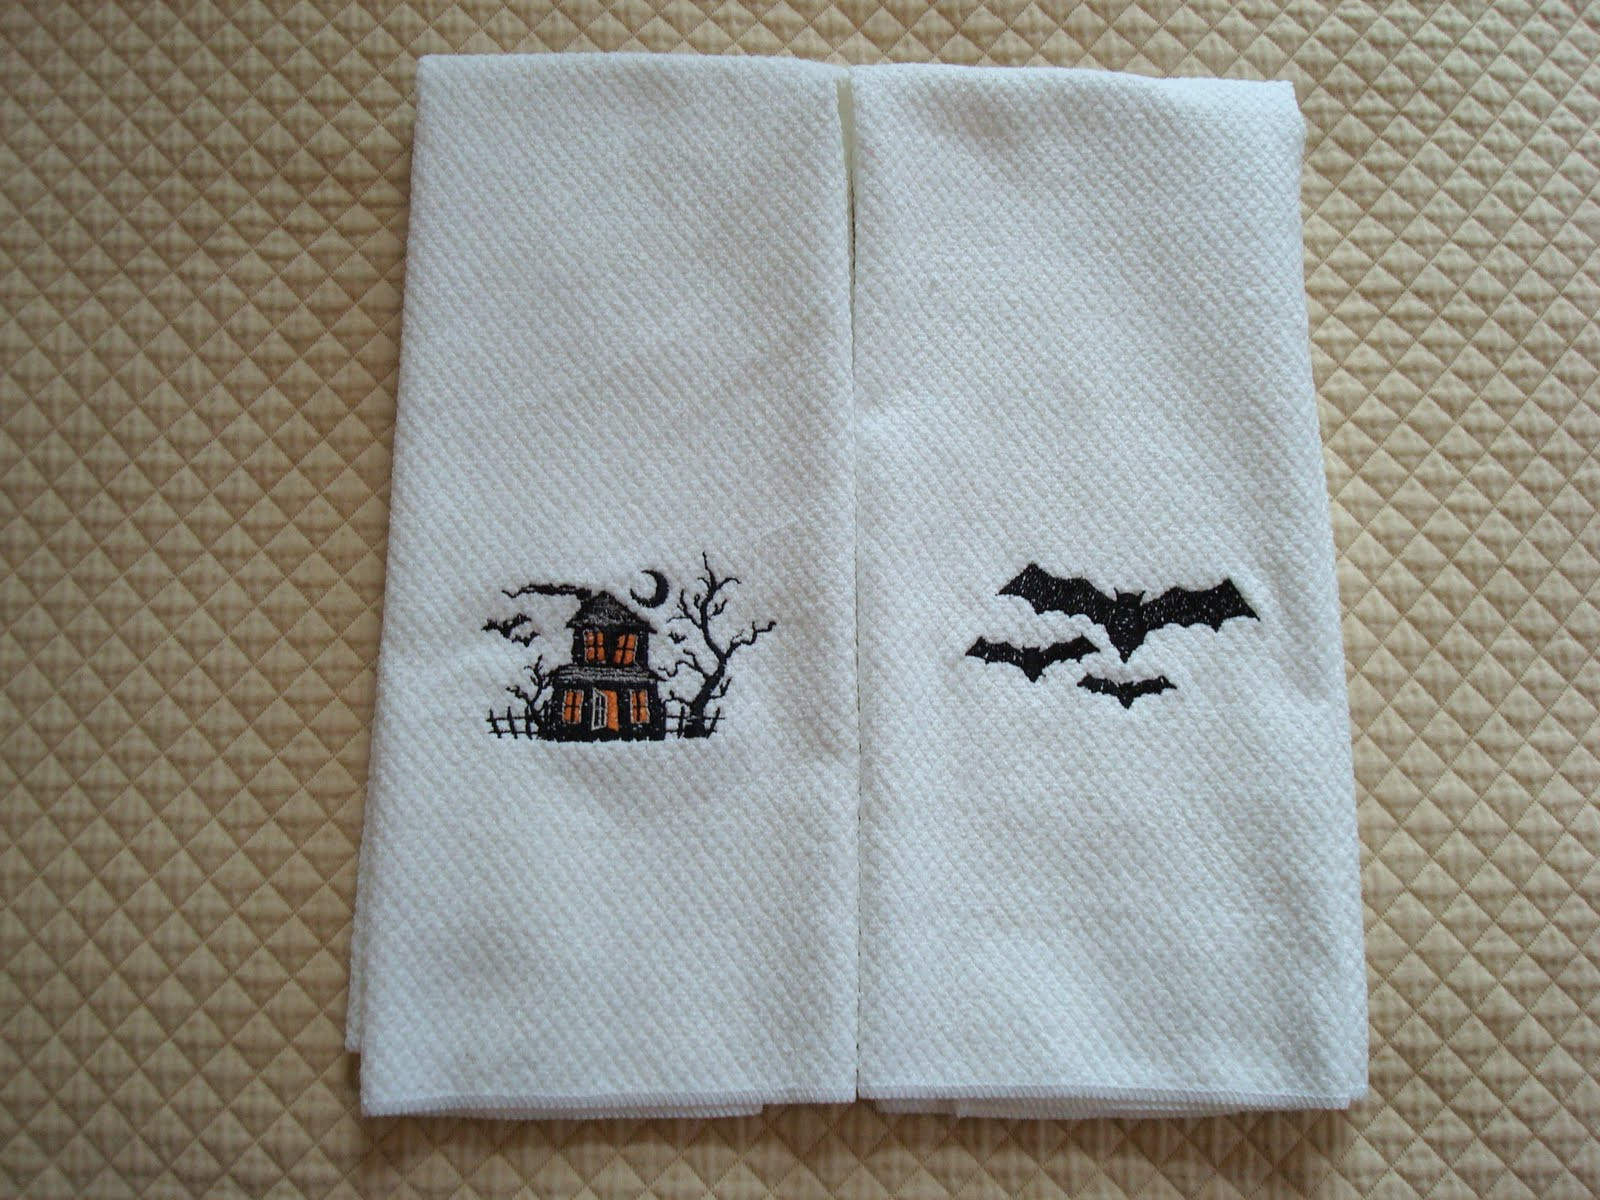 Halloween Kitchen Towels
 Closet Crafter Halloween Kitchen Towels